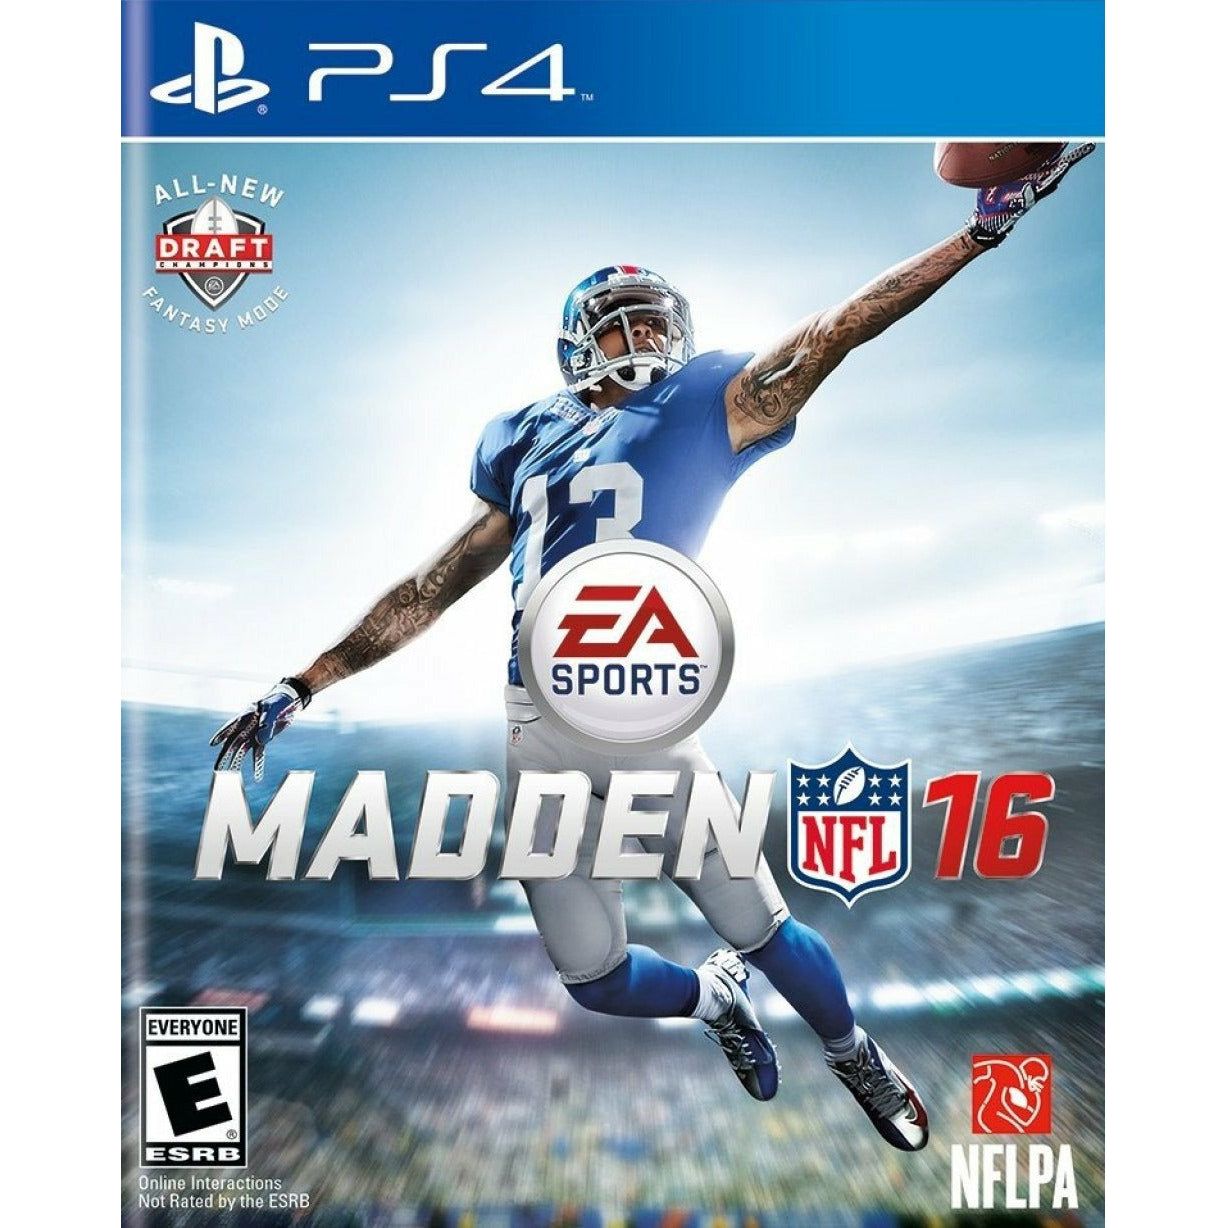 PS4 - Madden NFL 16